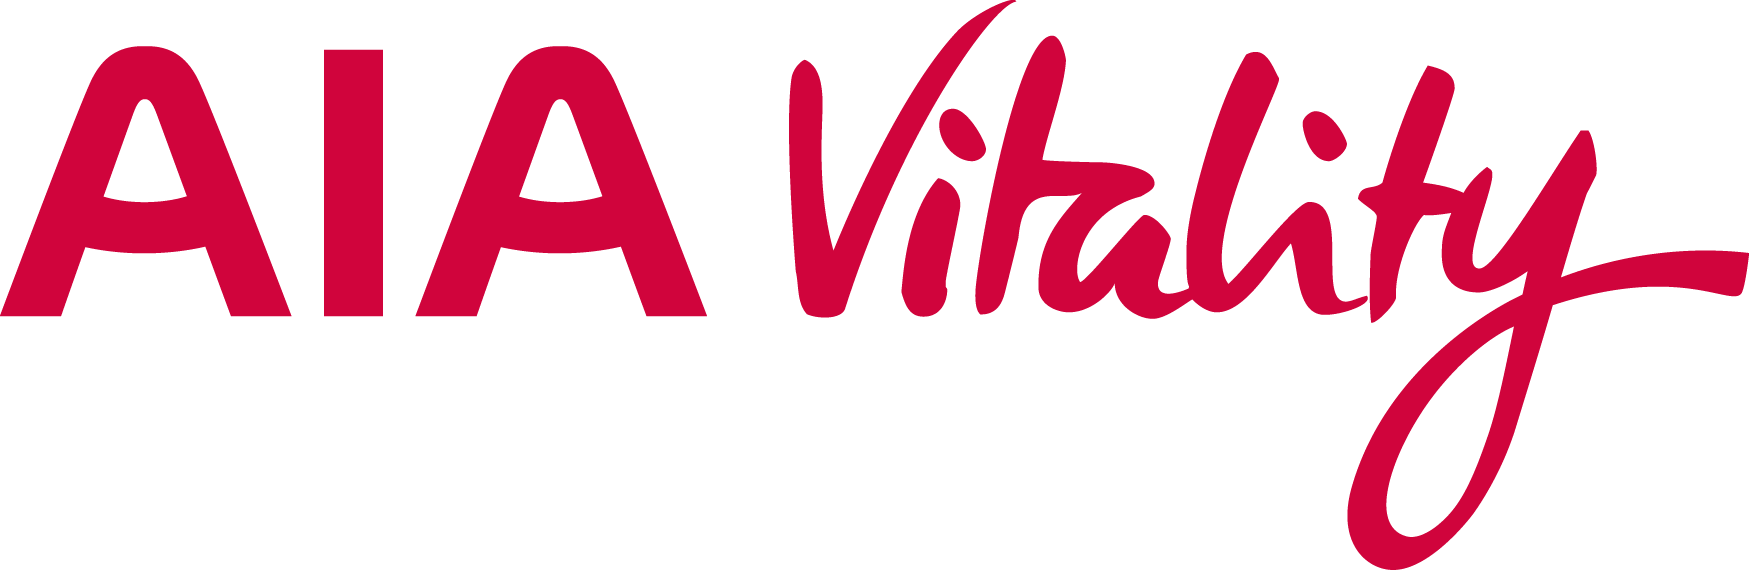 Vitality Logo - AIA Vitality Logo Vector Free Download